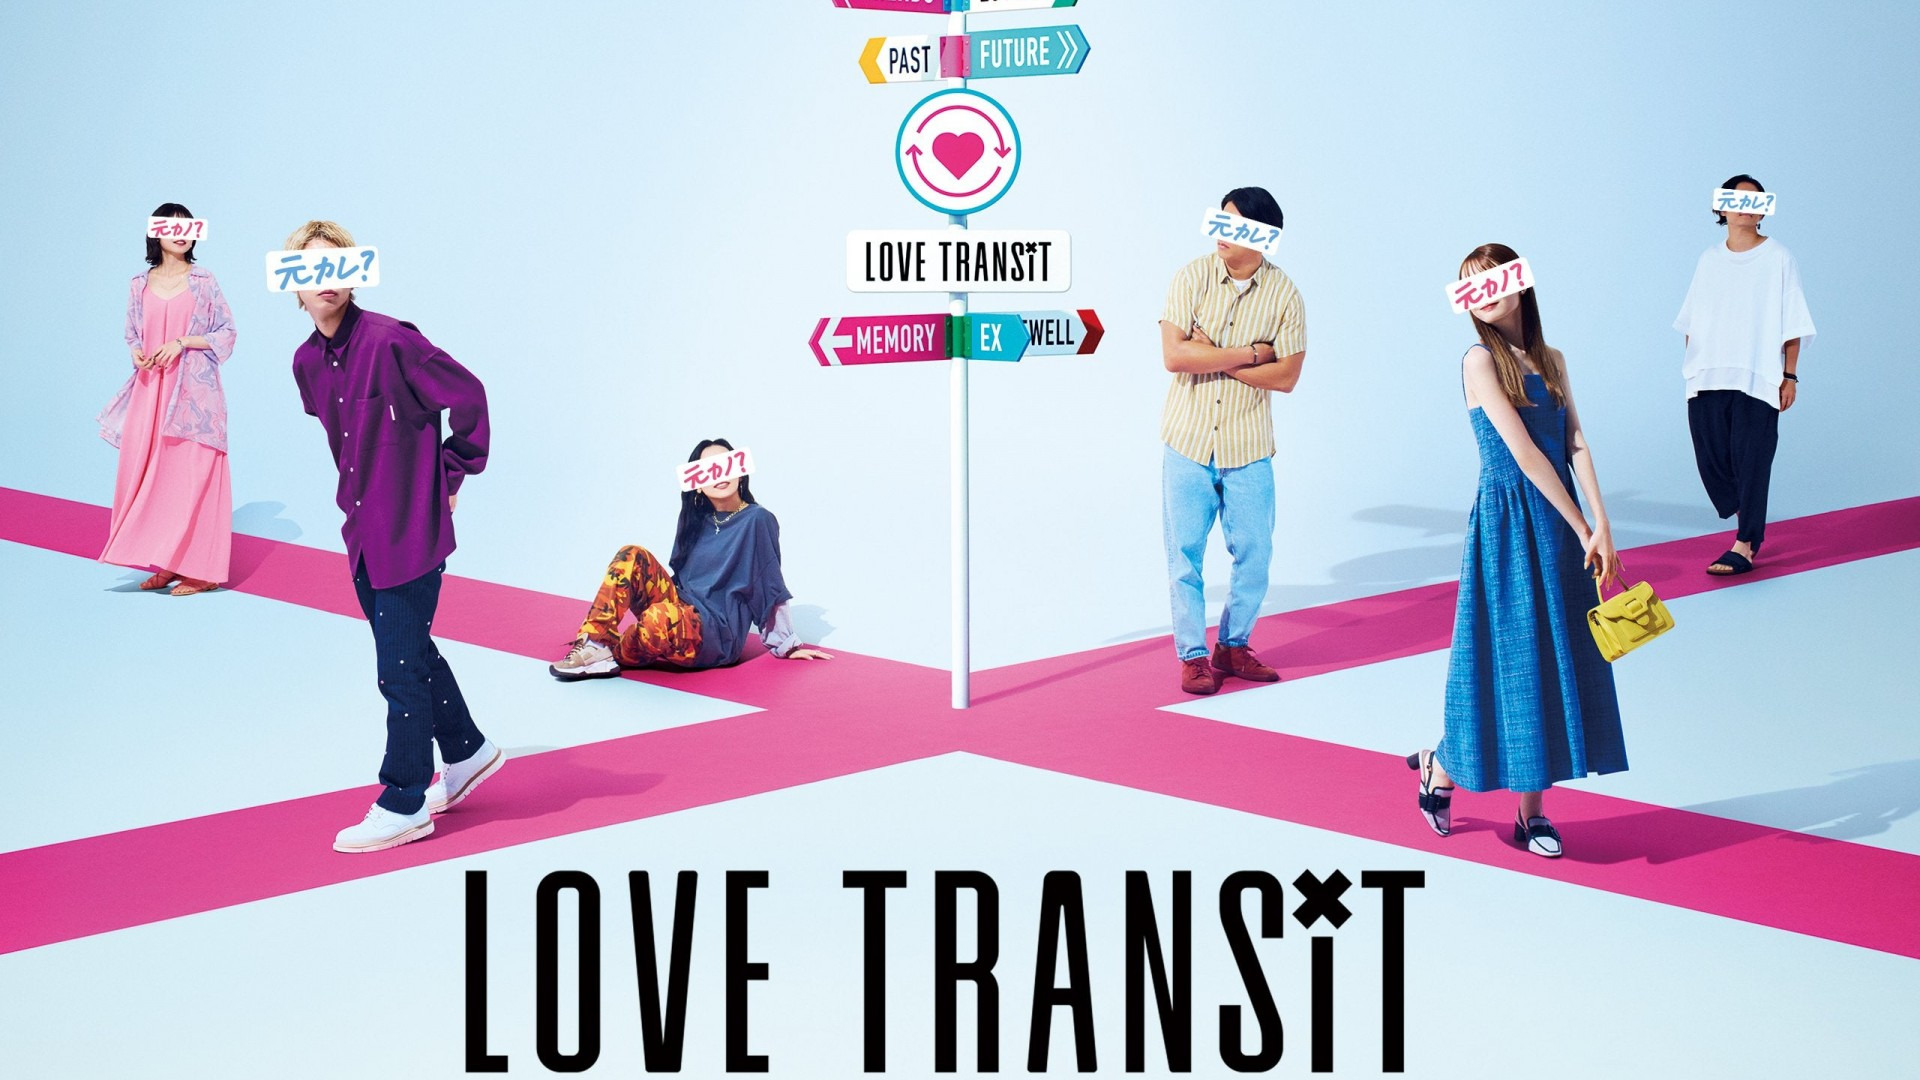 Show Love Transit